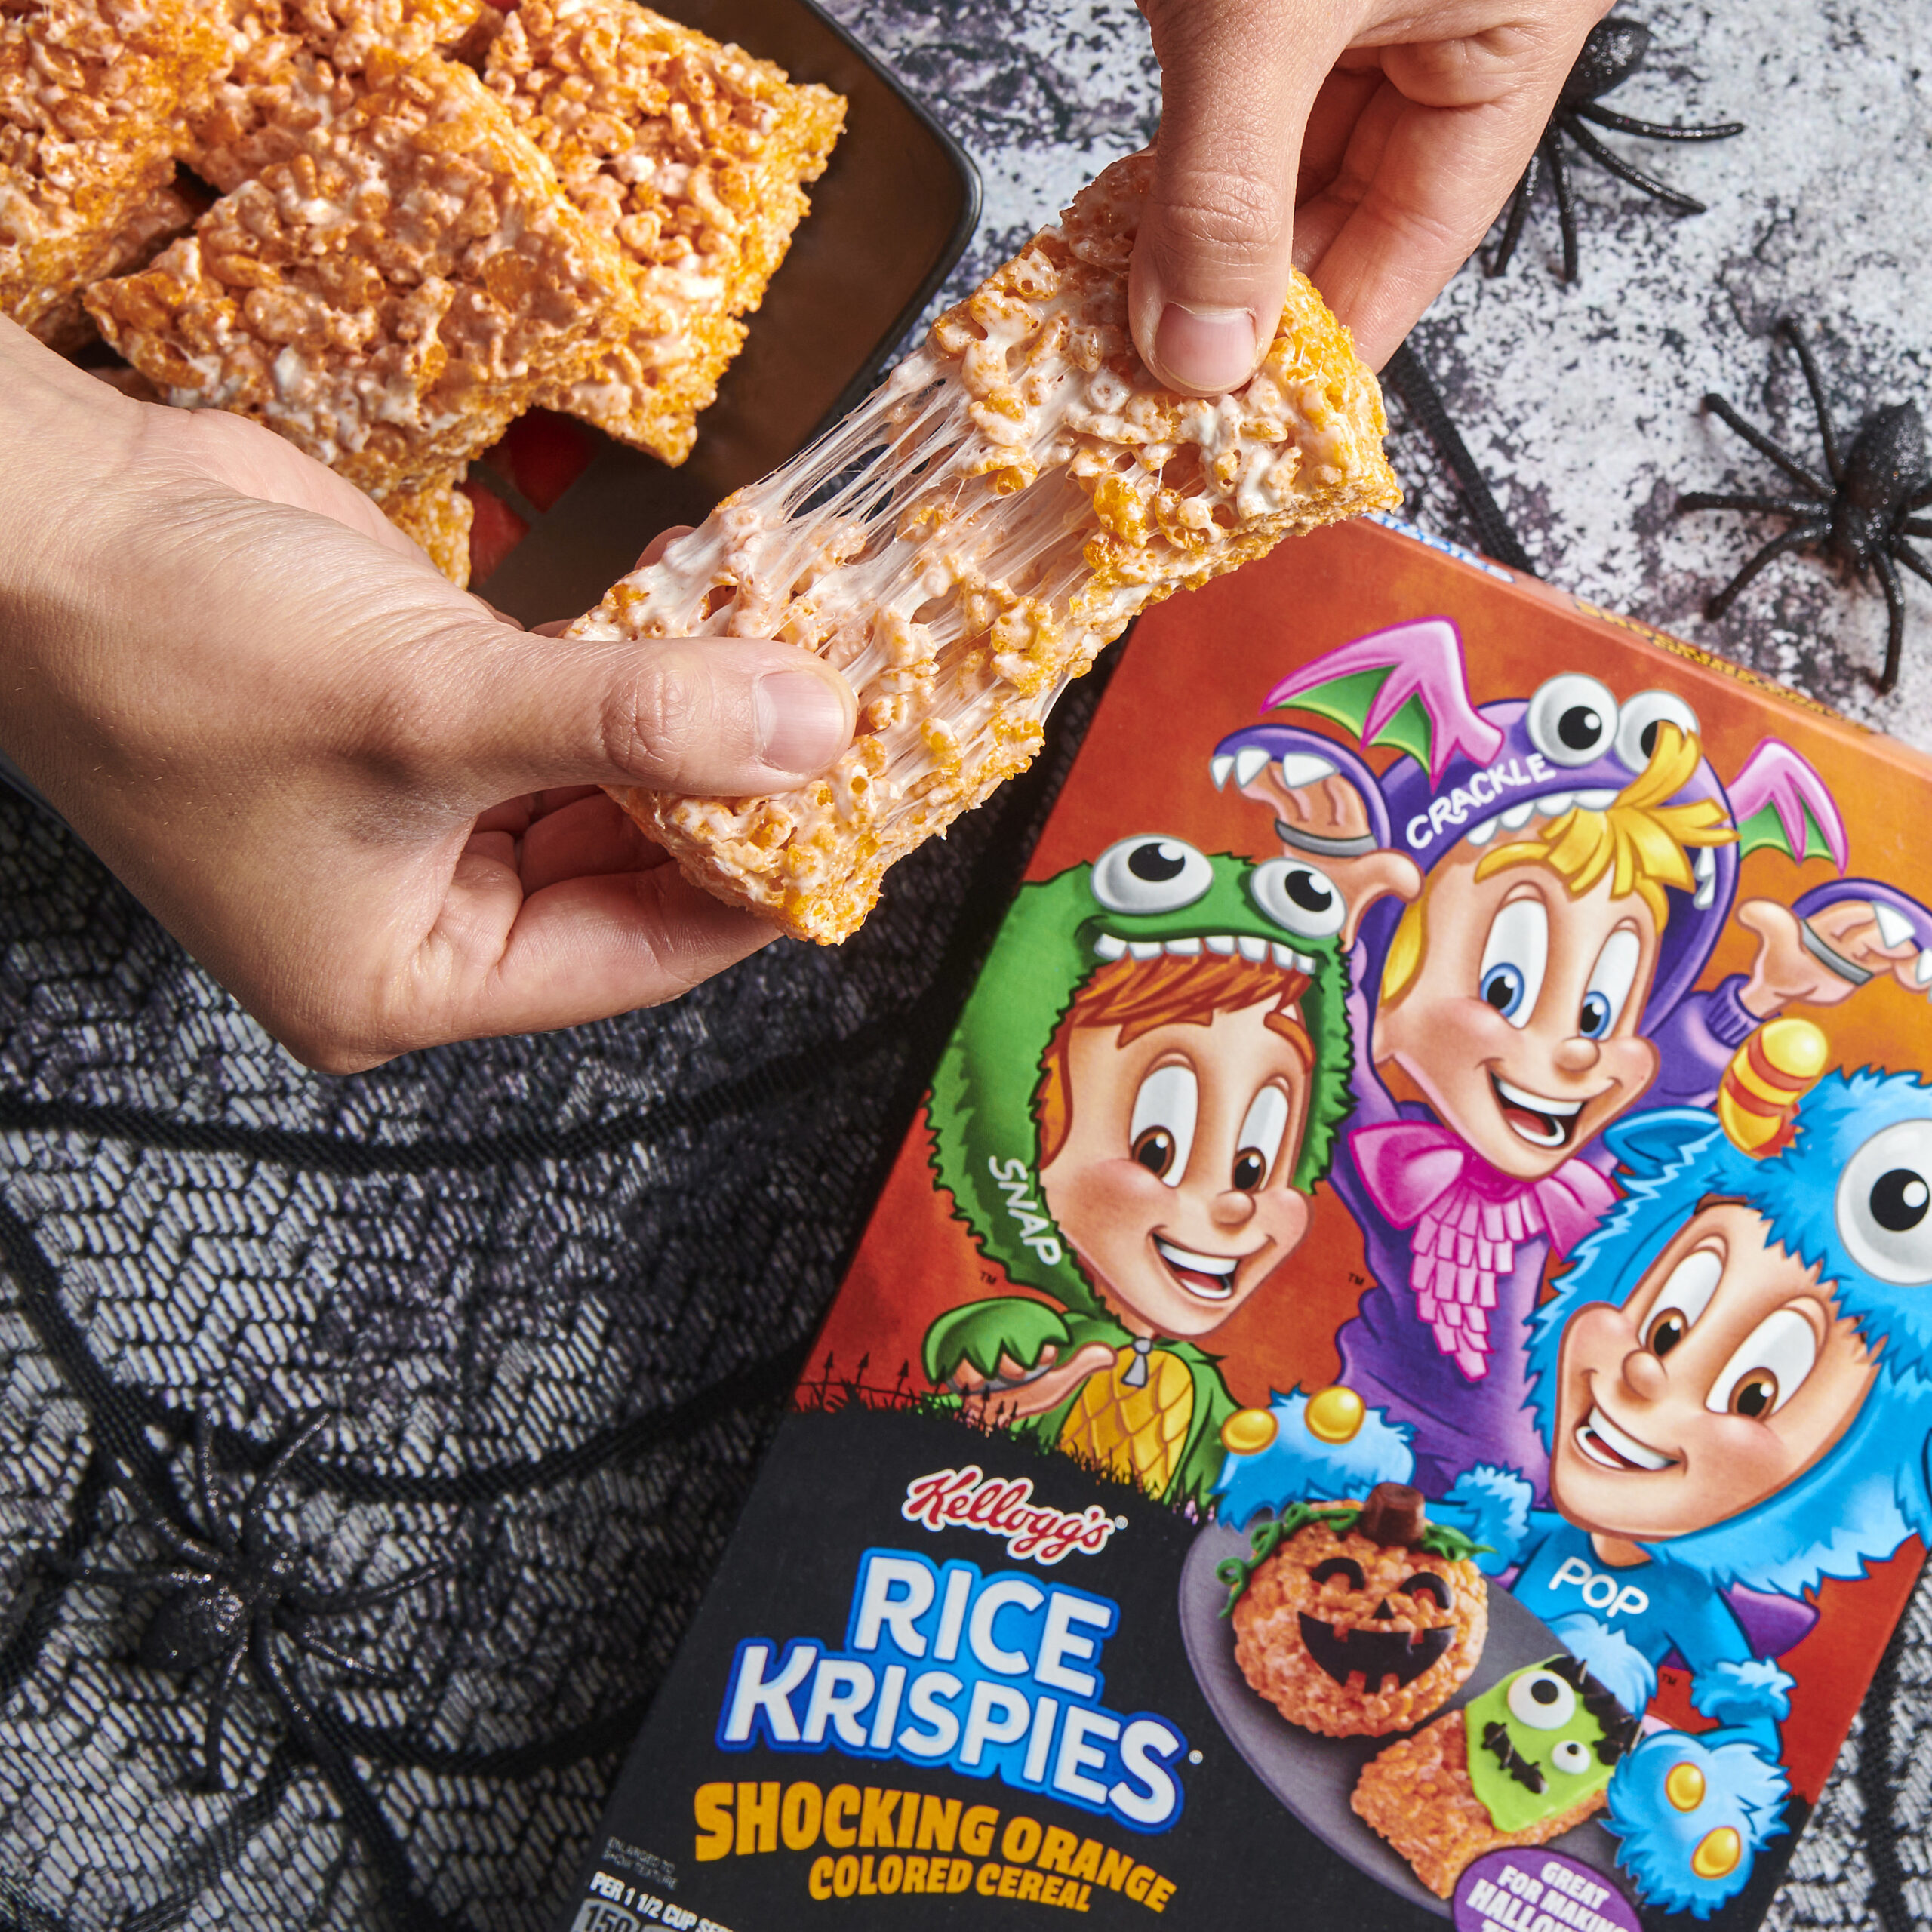 Kellogg’s Reveals Shocking Orange Rice Krispies Cereal